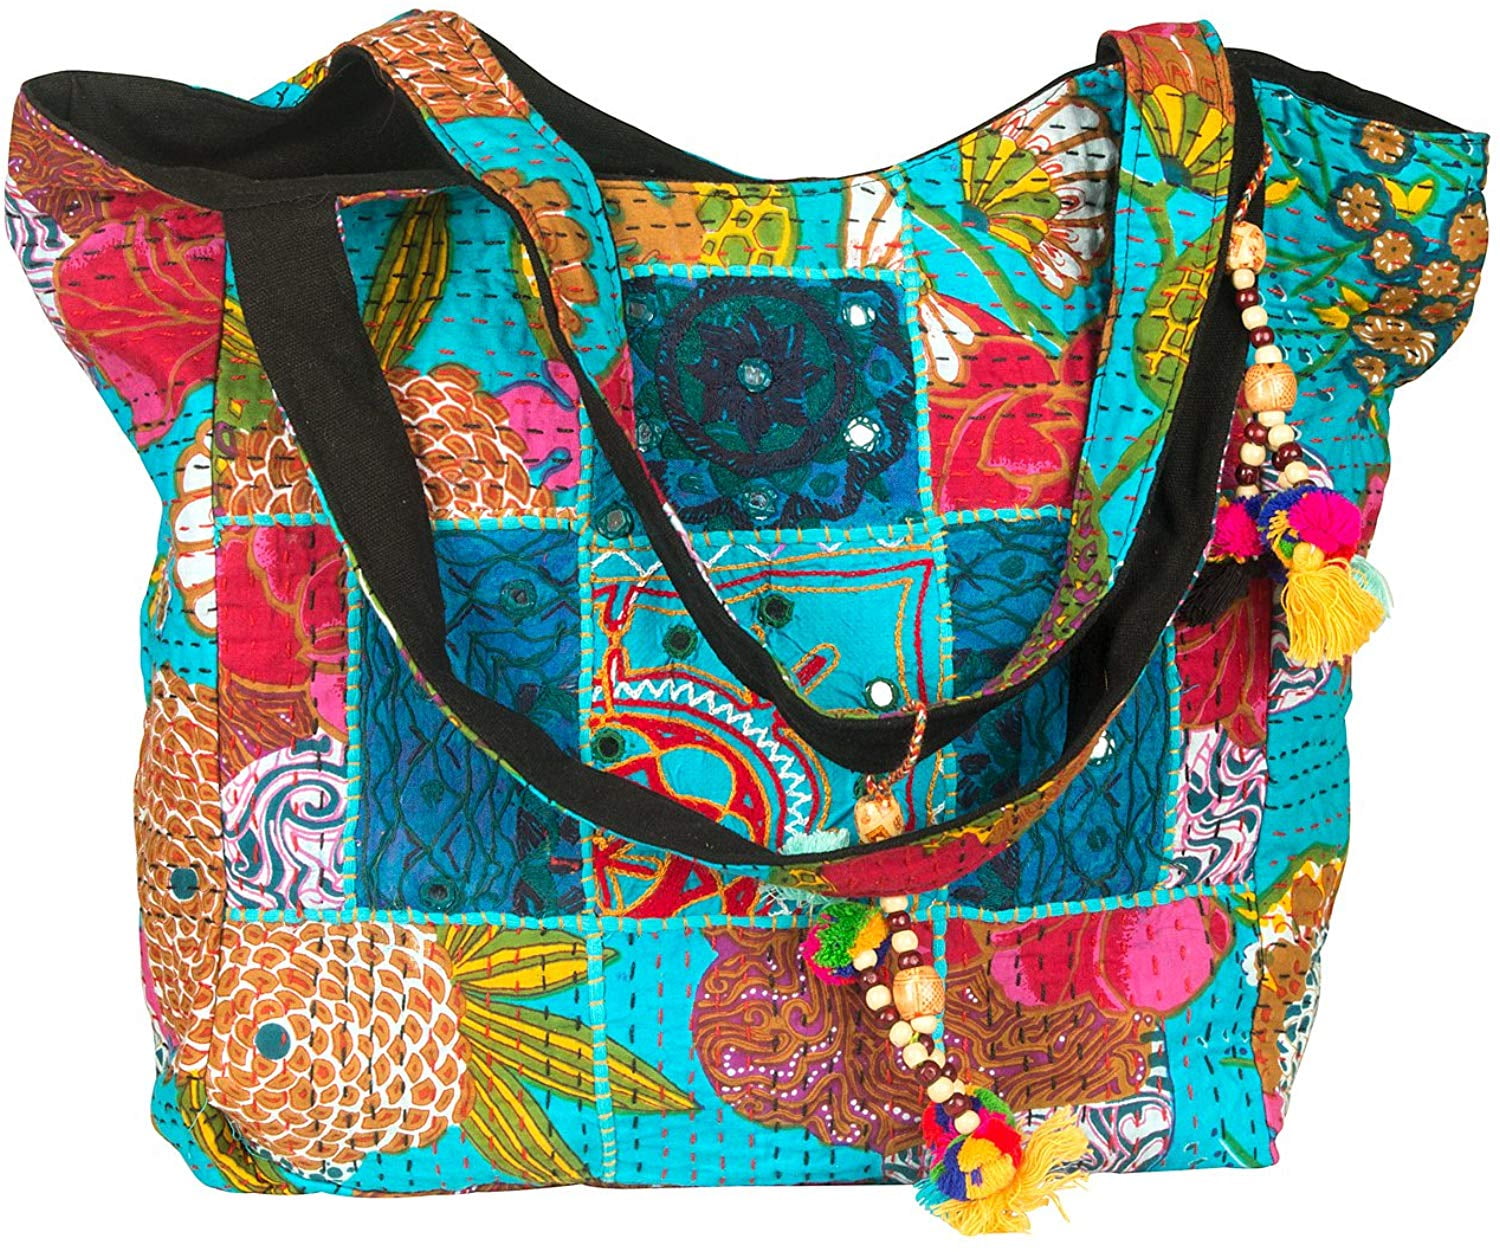 Hippy Shoulder Bag Handbag Tote Elephant Beach Holiday Travel Hippie Gypsy 